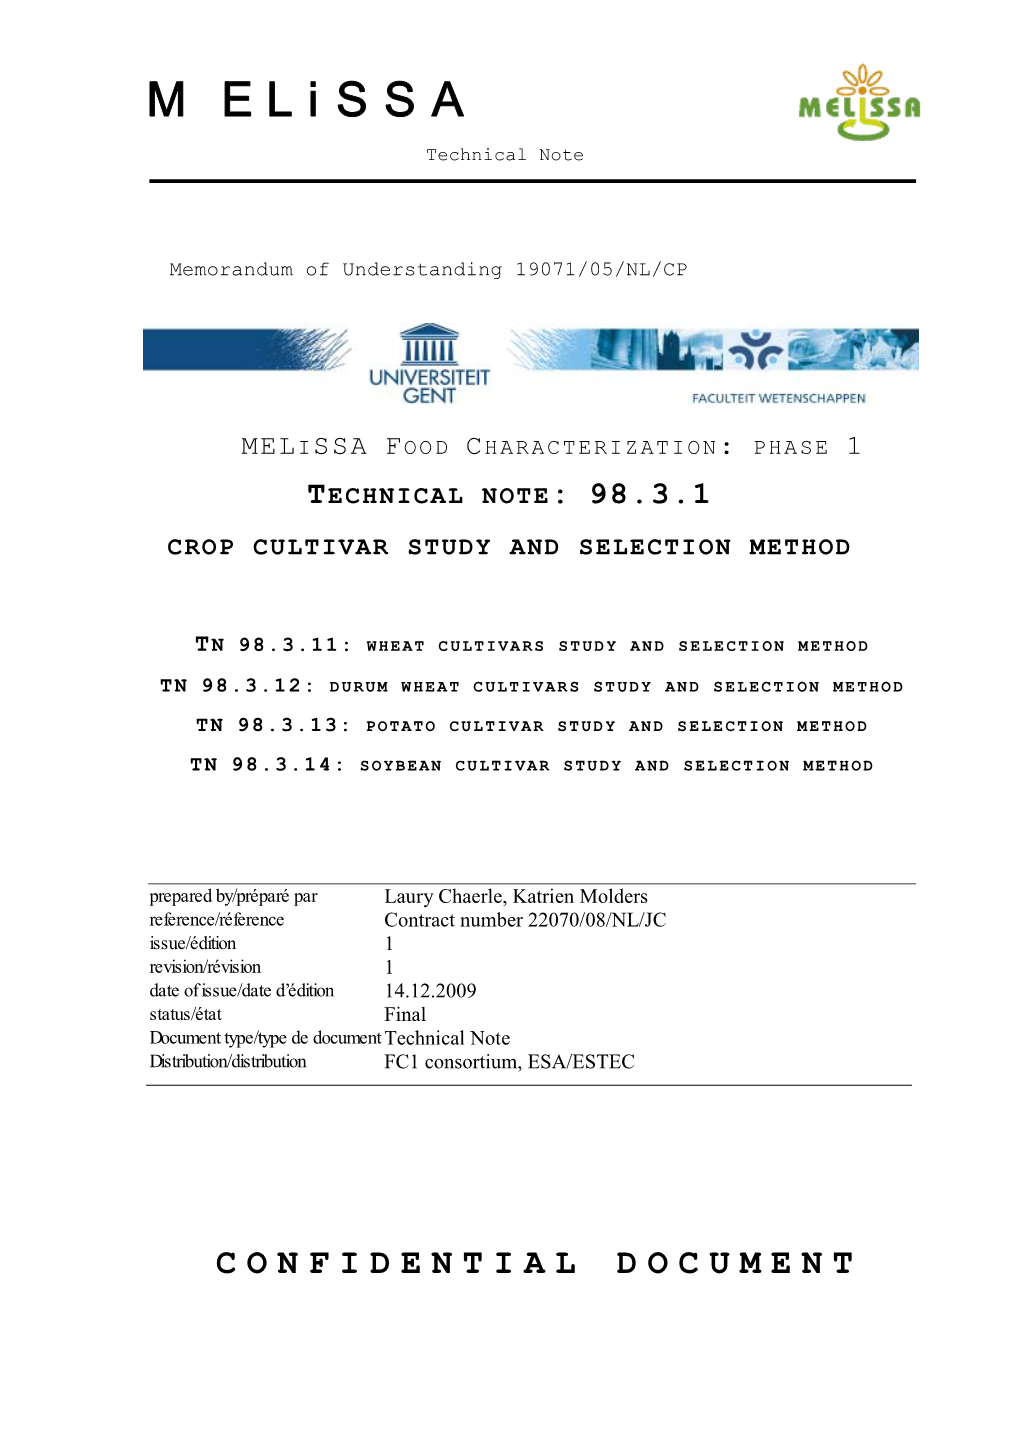 Tn 98.3.11: Wheat Cultivars Study and Selection Method Tn 98.3.12: Durum Wheat Cultivars Study and Selection Method